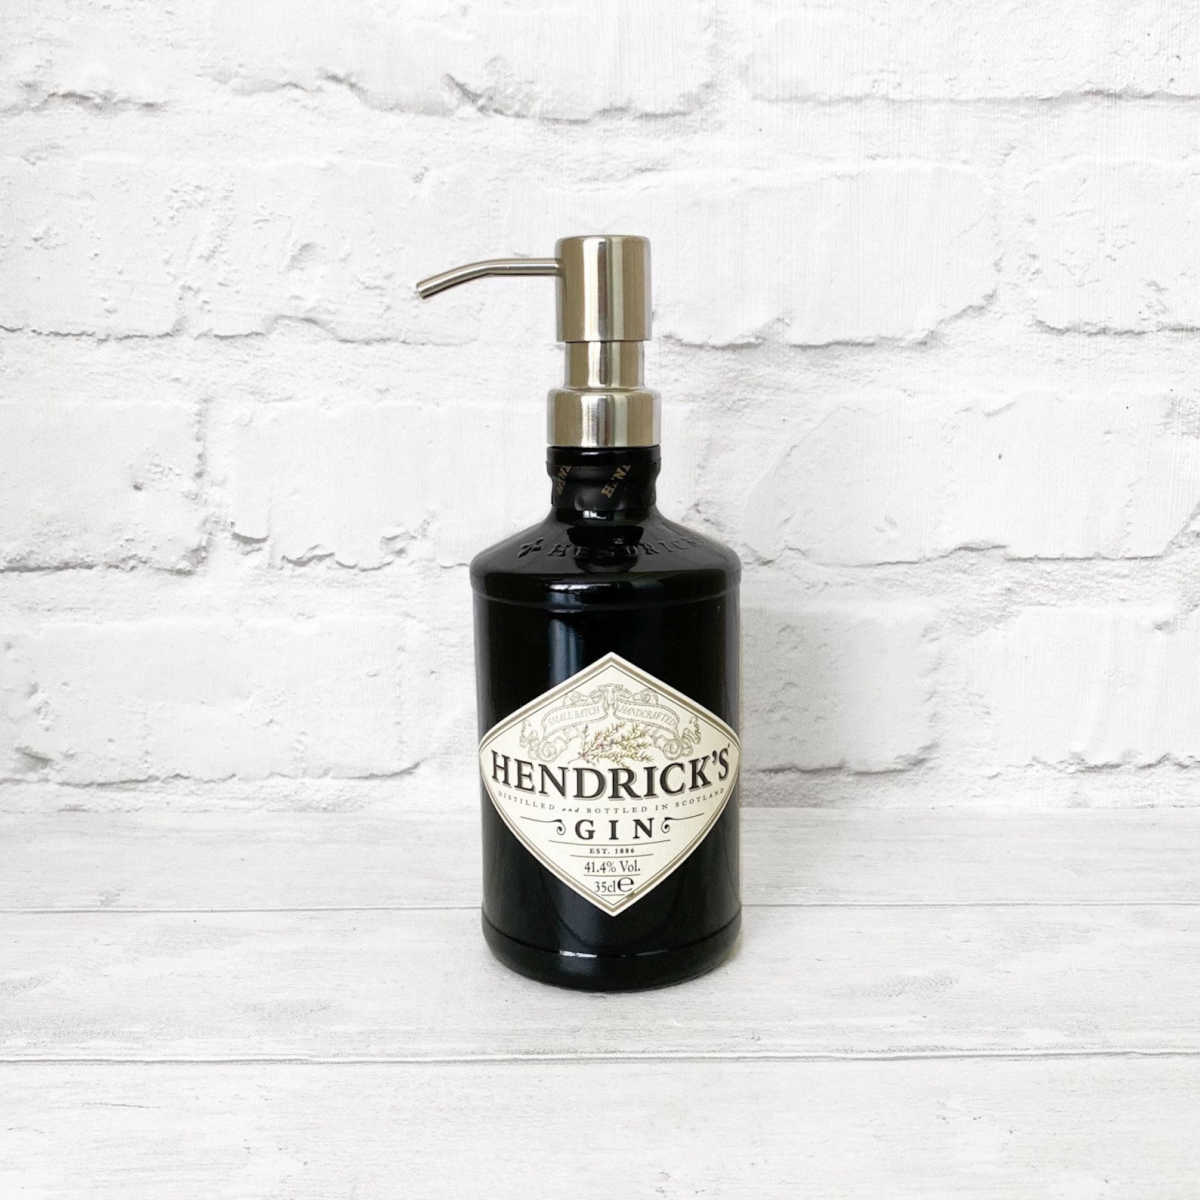 Hendricks gin bottle upcycled into a liquid soap dispenser